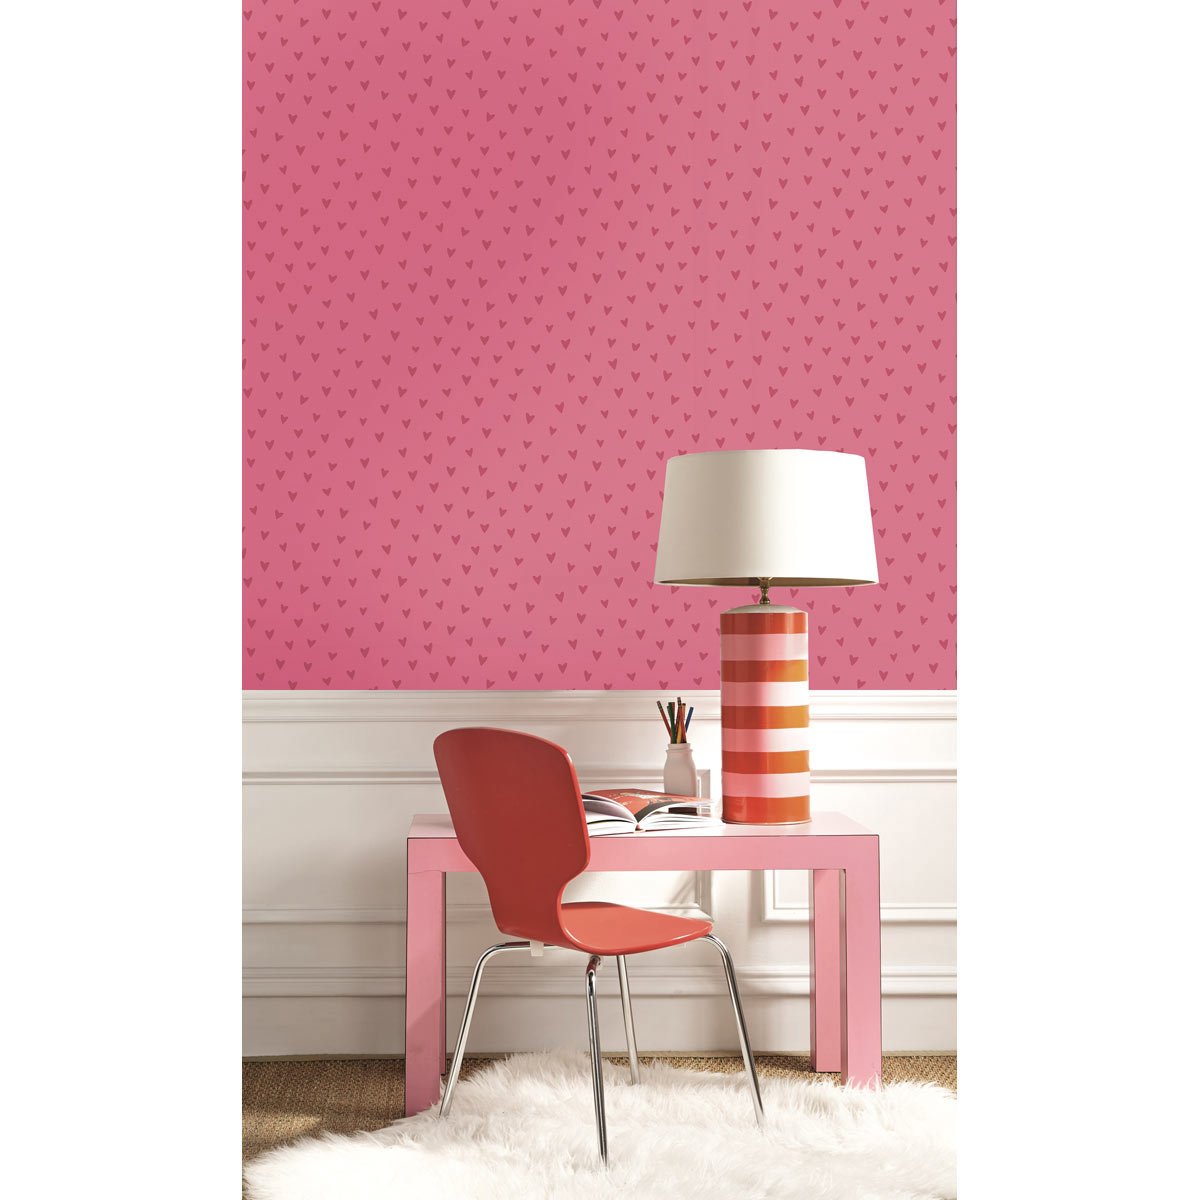 Seabrook Glitter Damask Pink Wallpaper